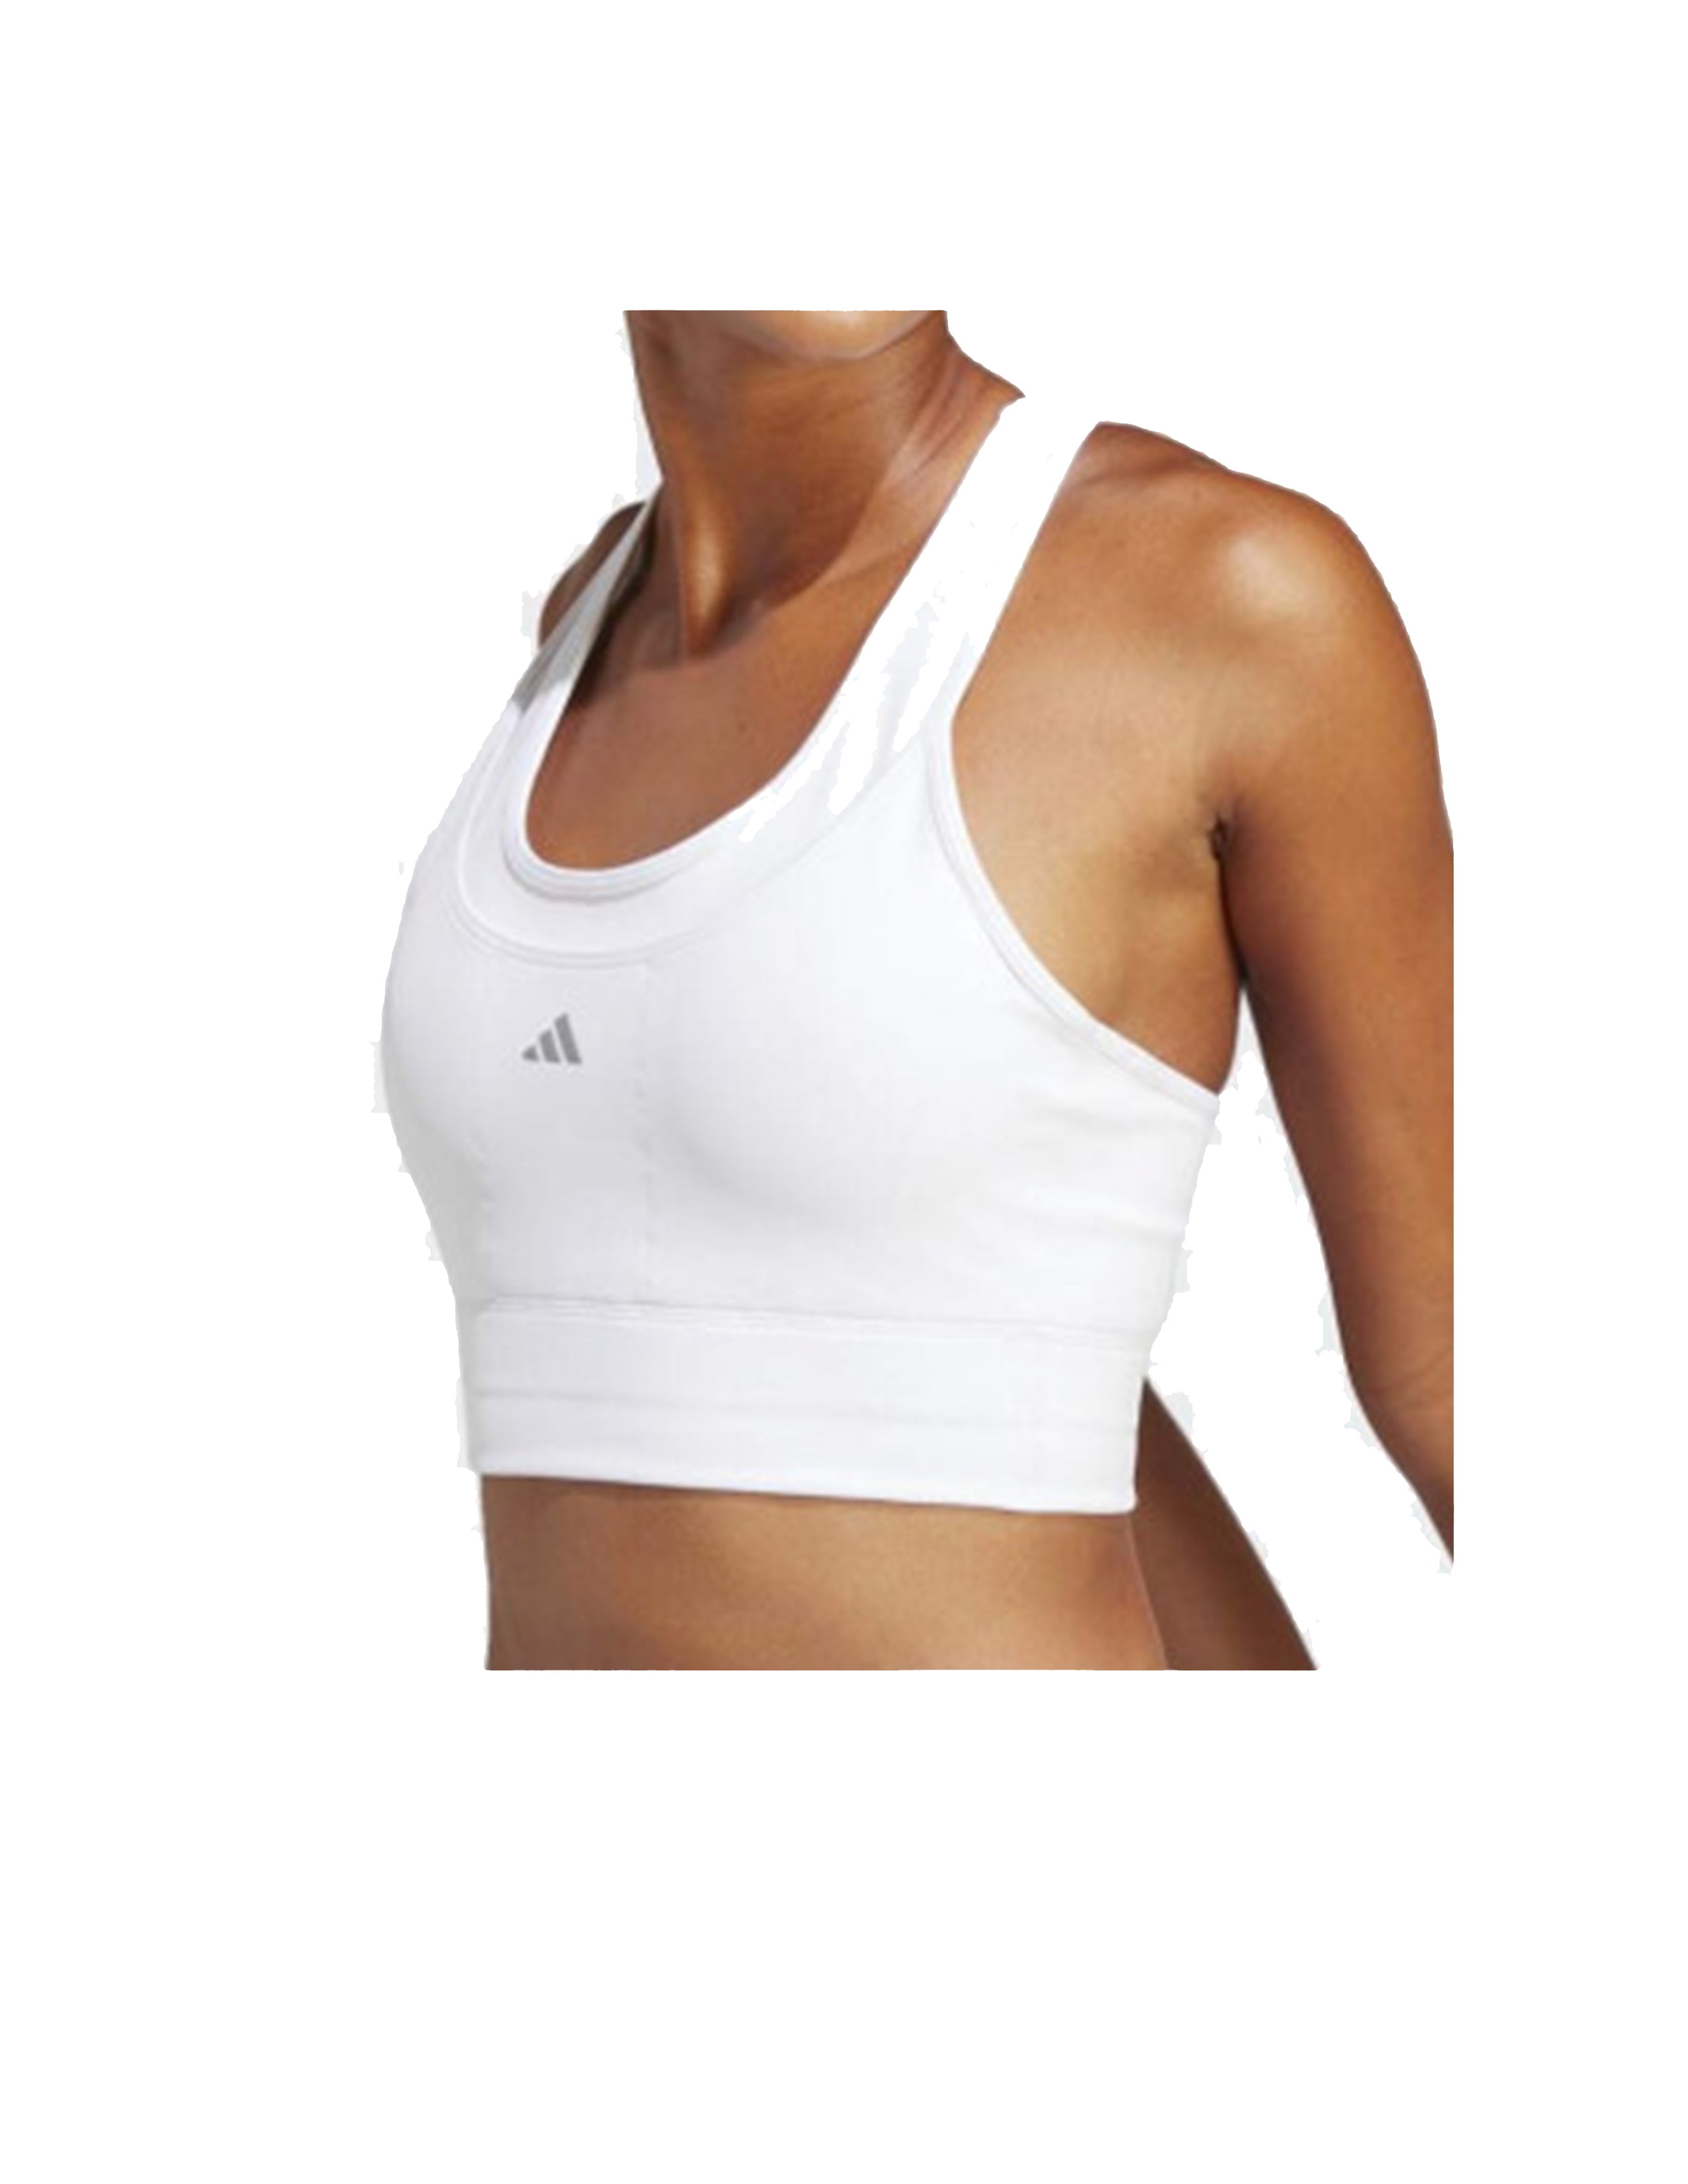 Adidas Women's White Sport Support Running Pocket Bra Size LDD (38